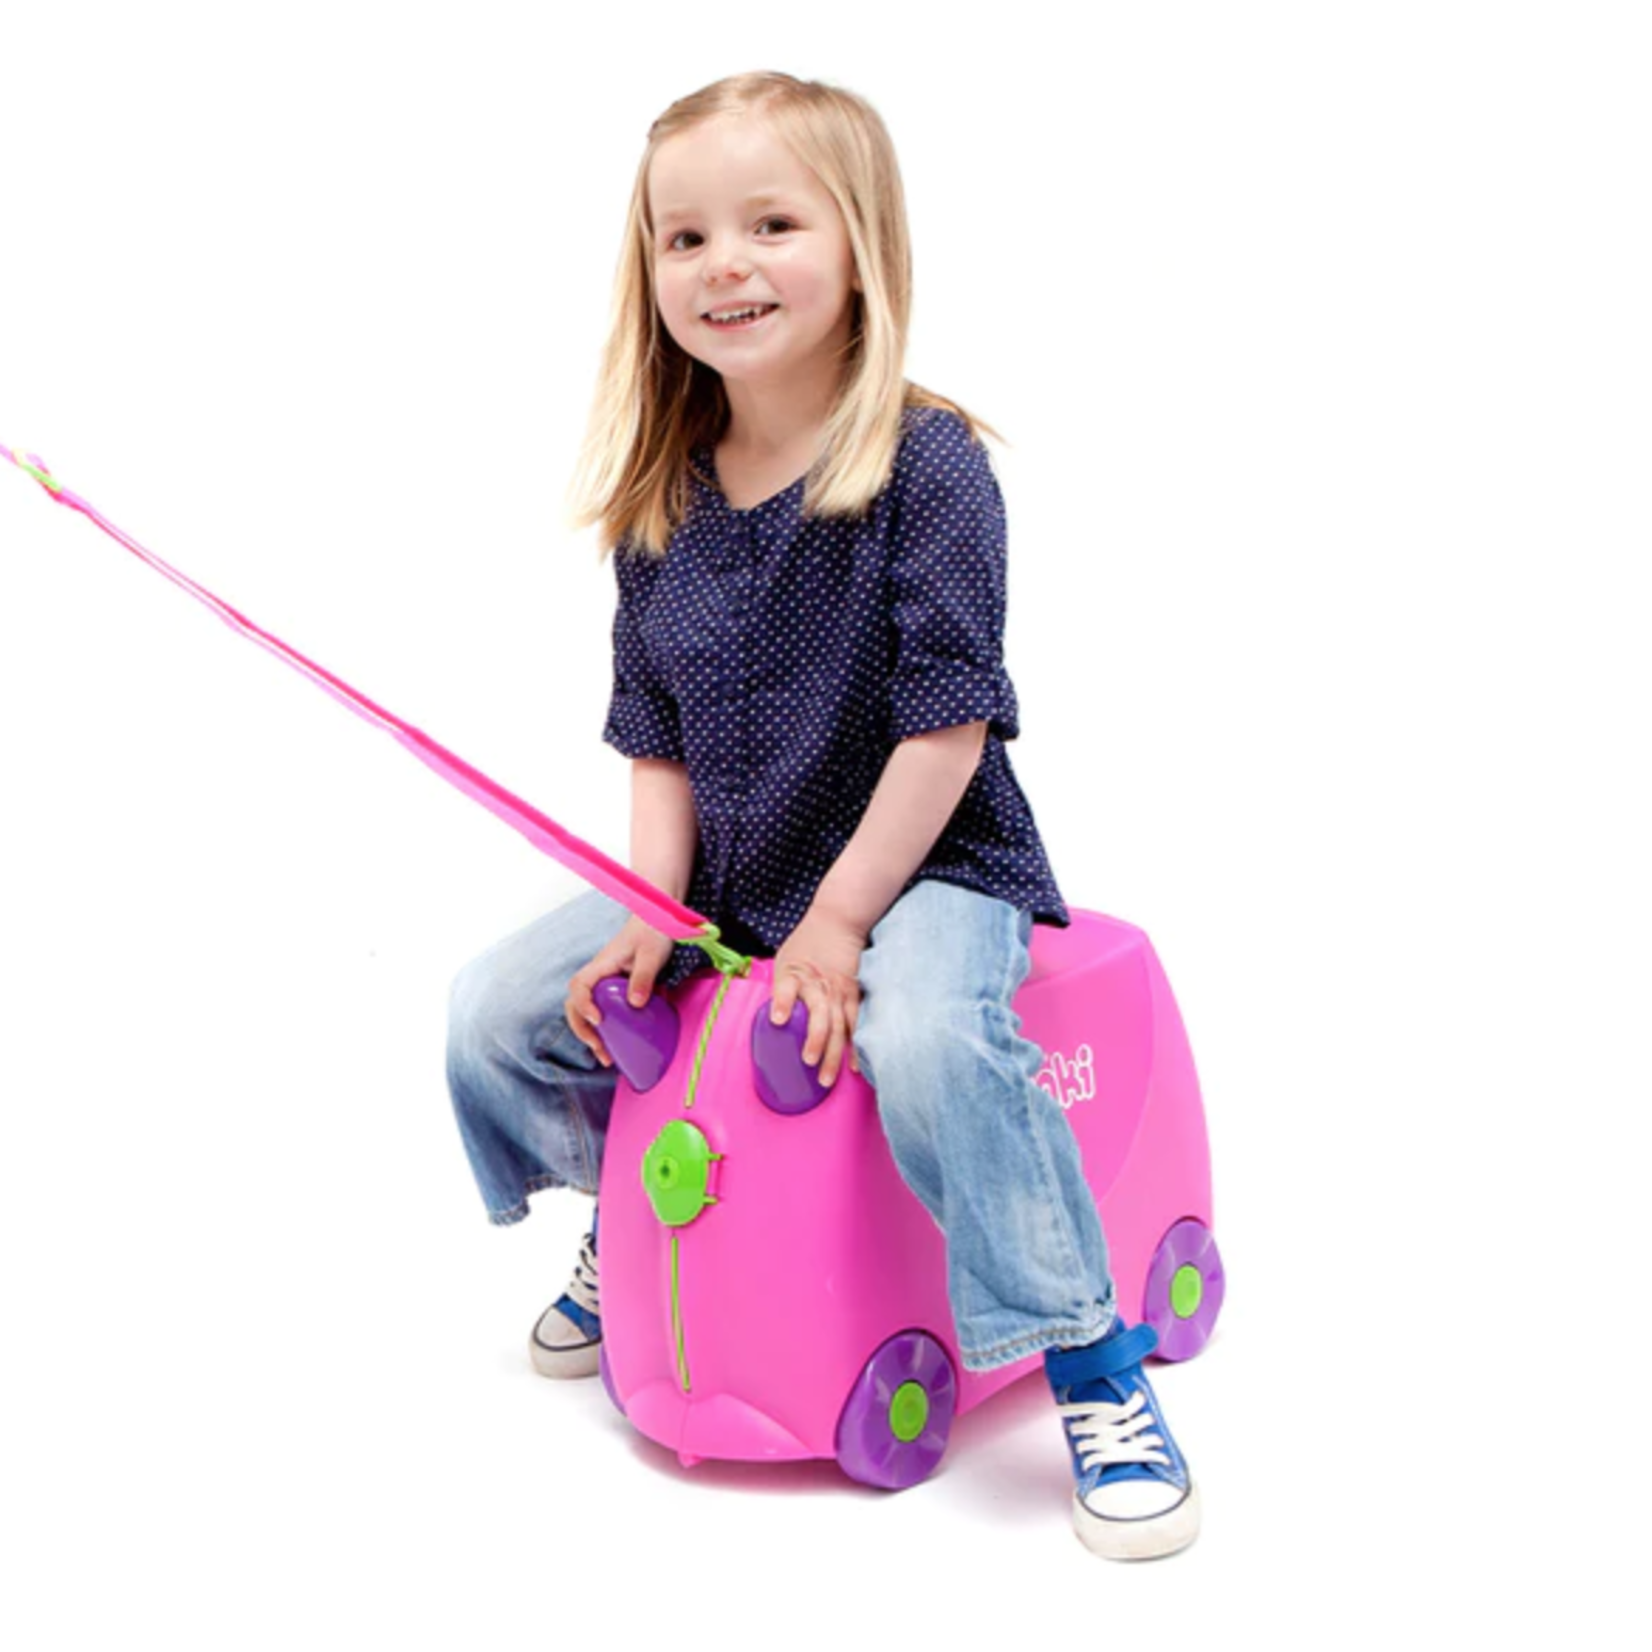 Trunki Ride-on Luggage - Trixie Pink